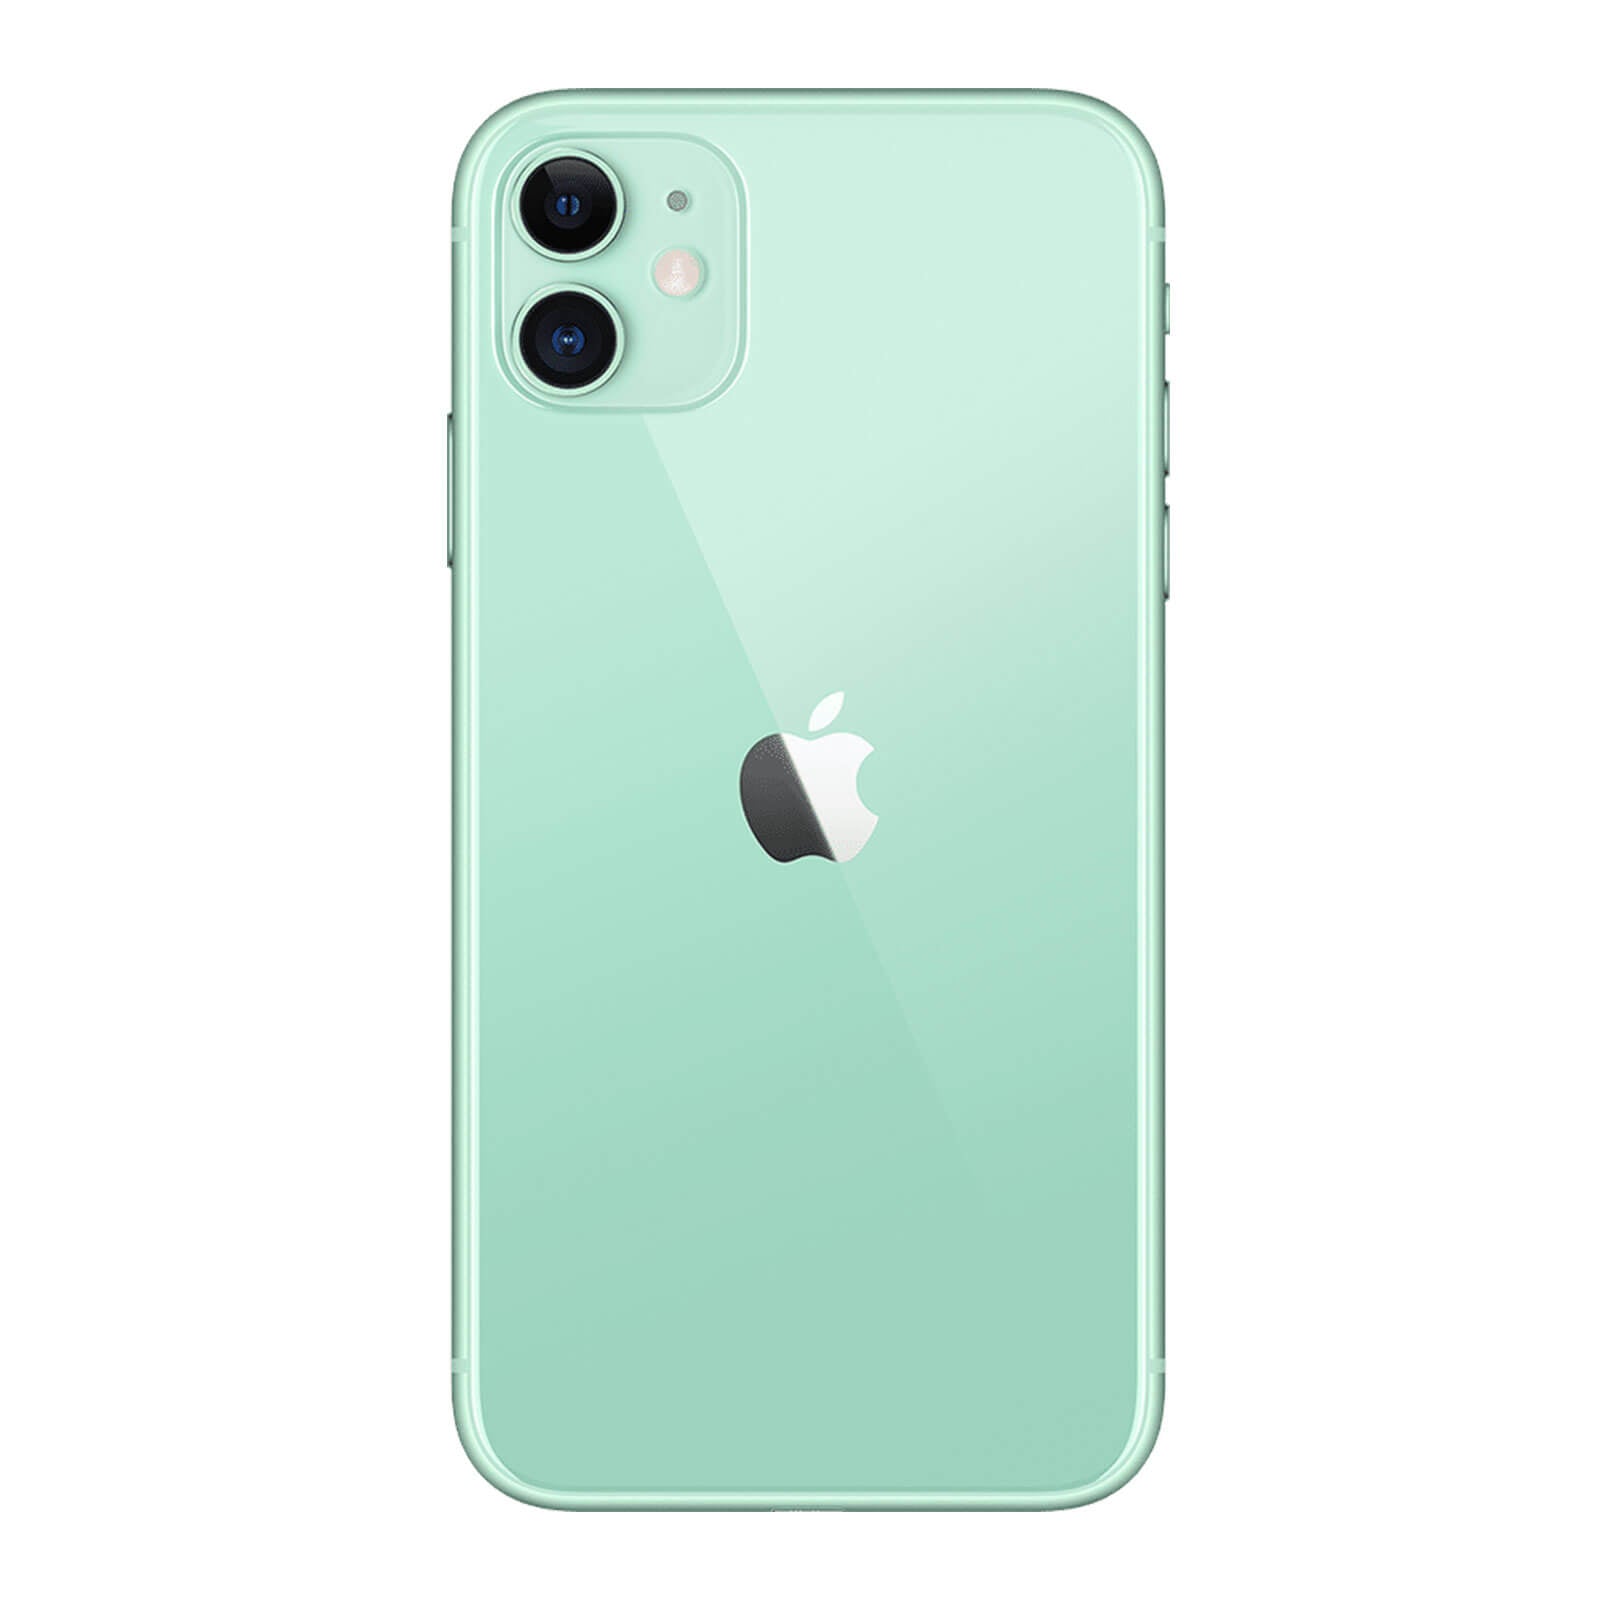 Apple iPhone 11 64GB Green Very Good - Verizon